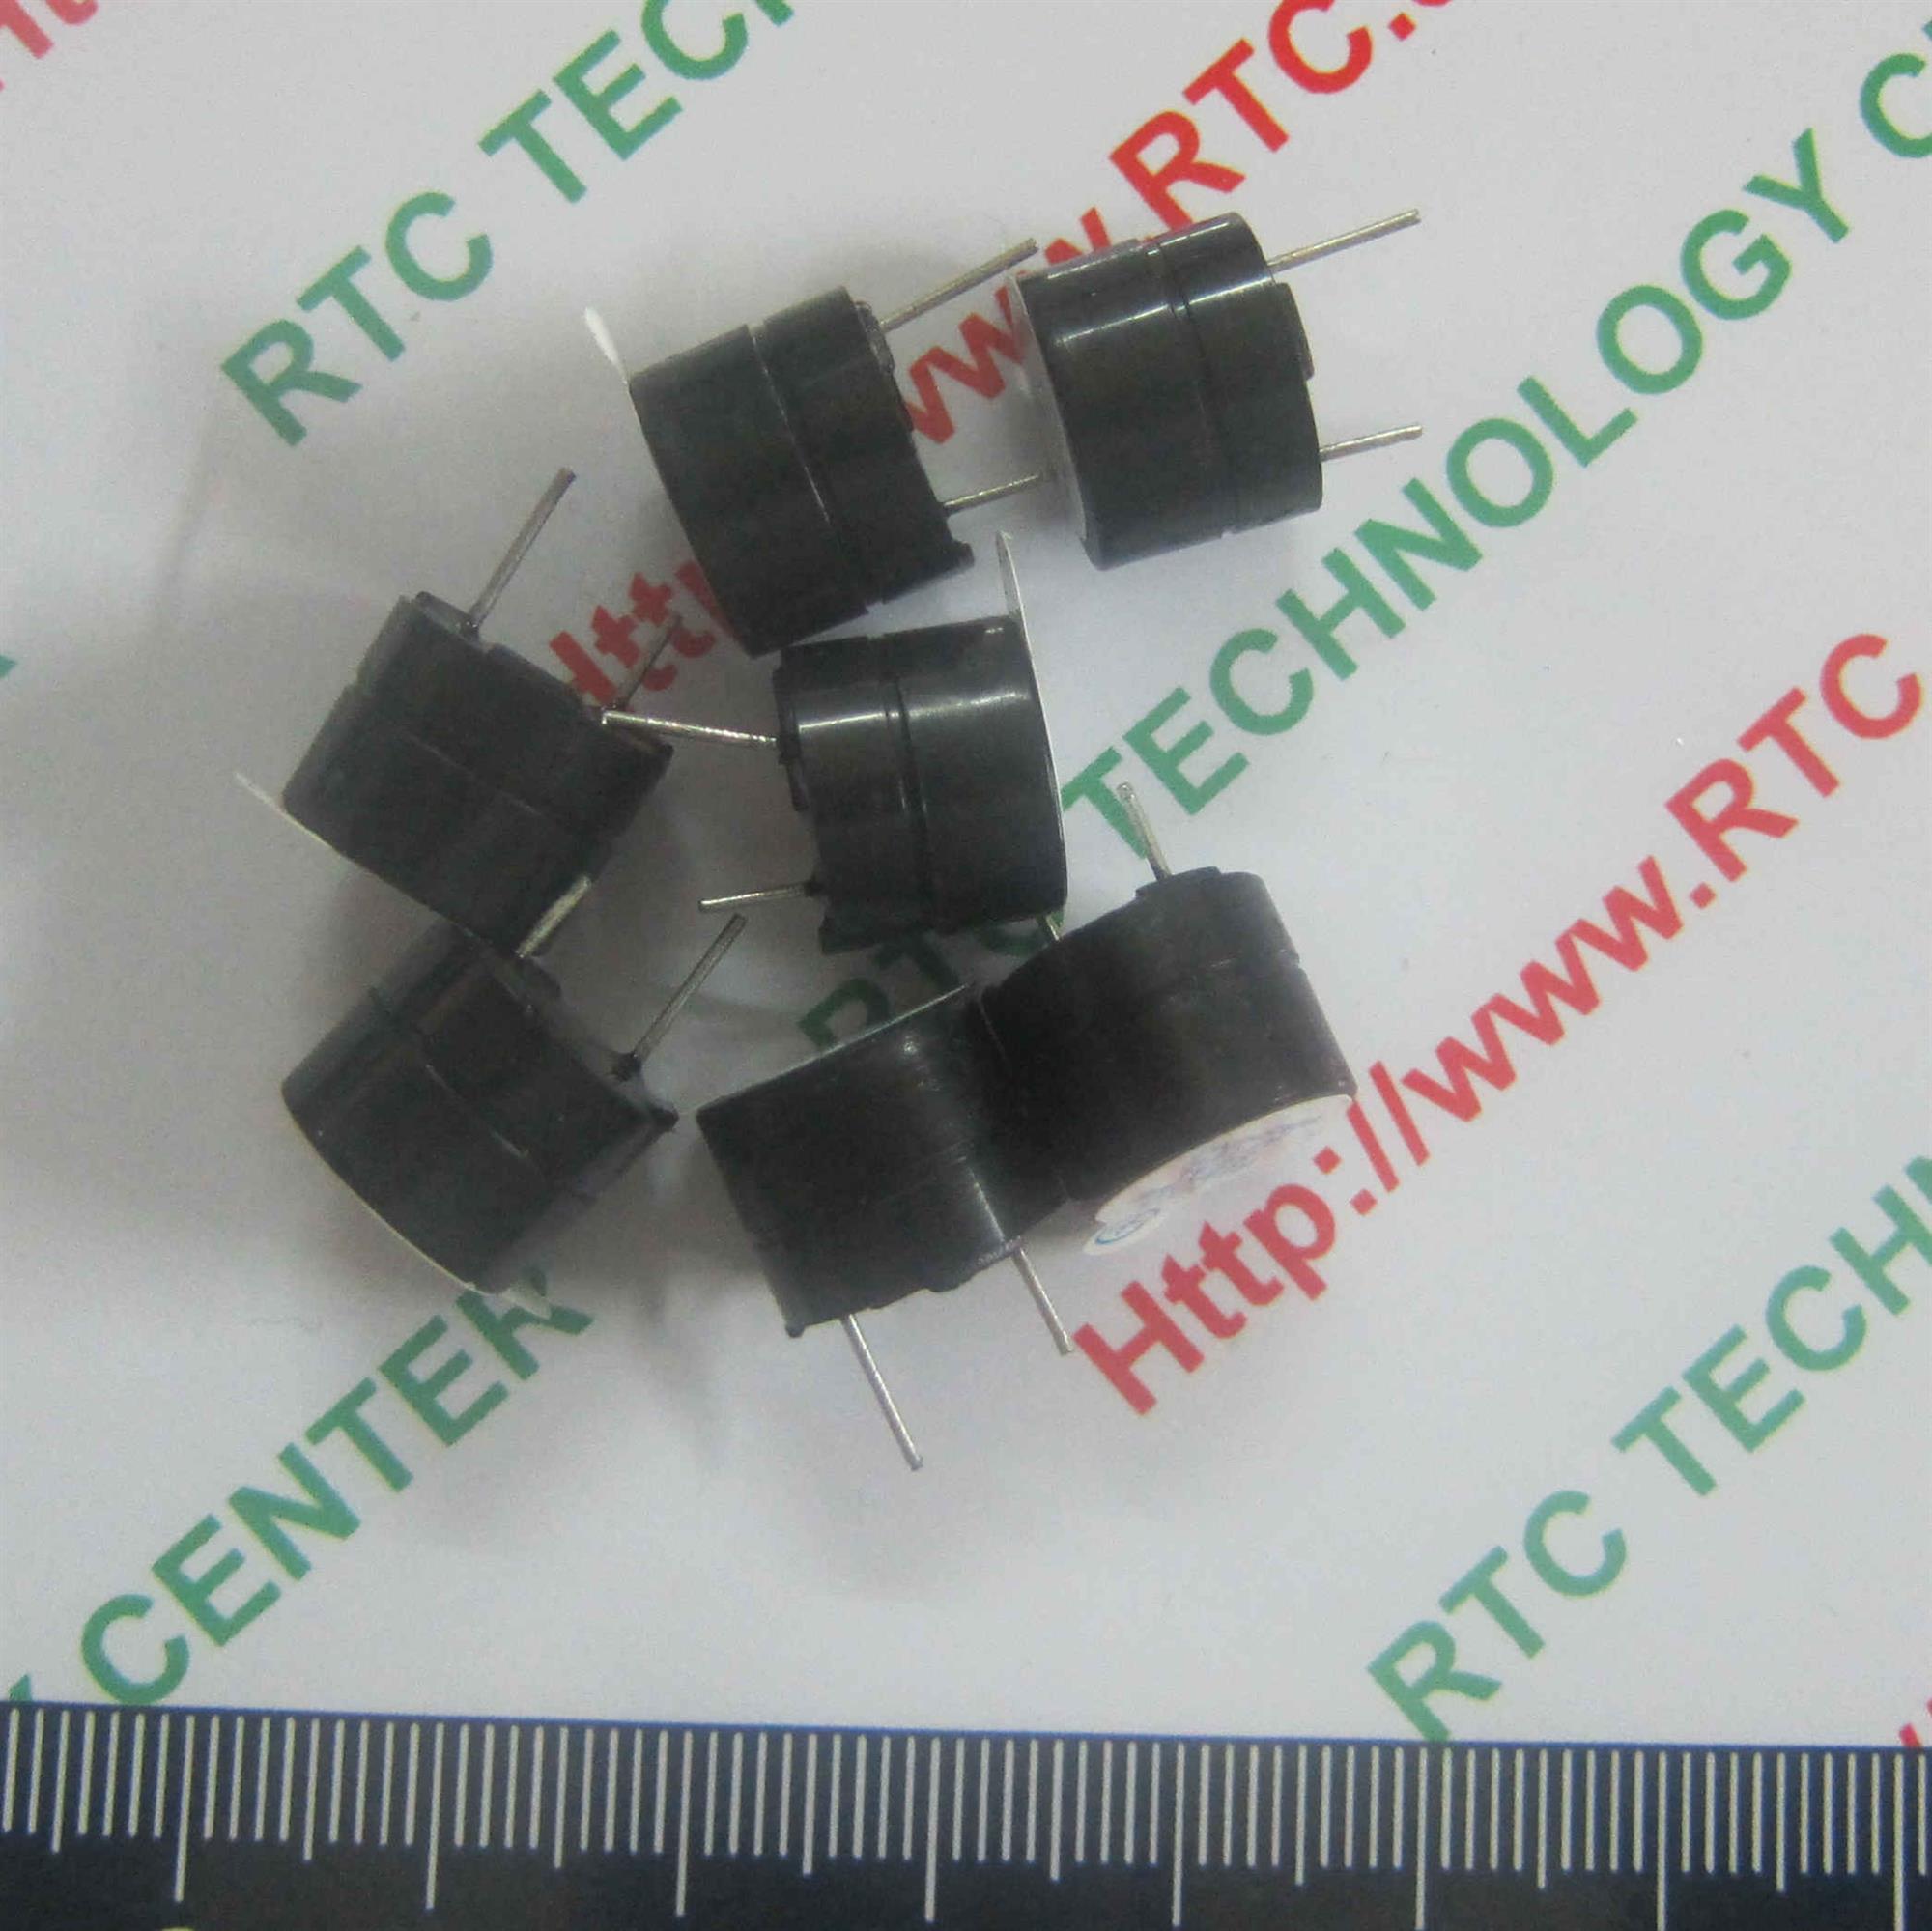 Còi chip 12V 12095 / Loa chip 12V 12*9.5mm - Buzz 12V - S5H11 (KA4H1)